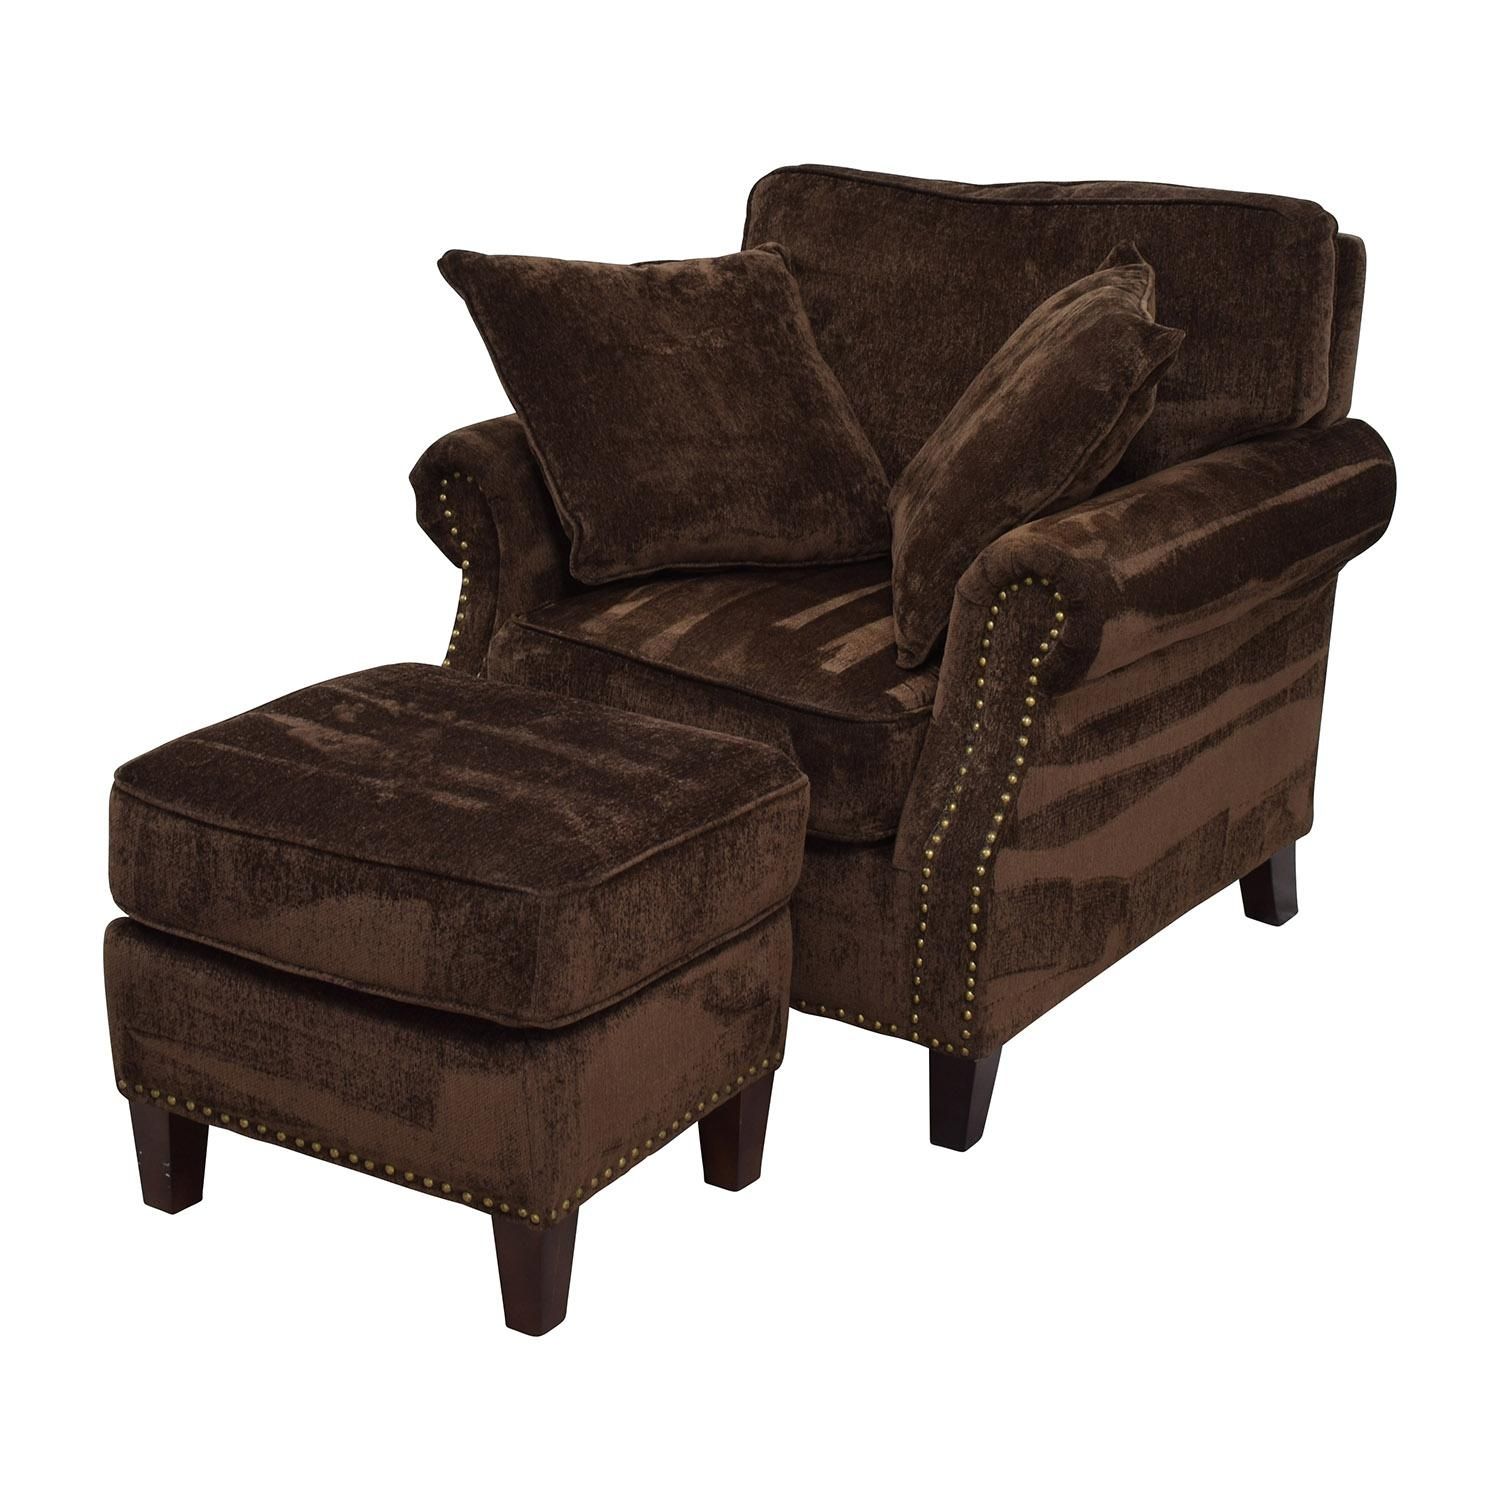 55% Off – Bob's Furniture Bob's Furniture Mirage Studded Brown Regarding Brown Sofa Chairs (View 2 of 20)